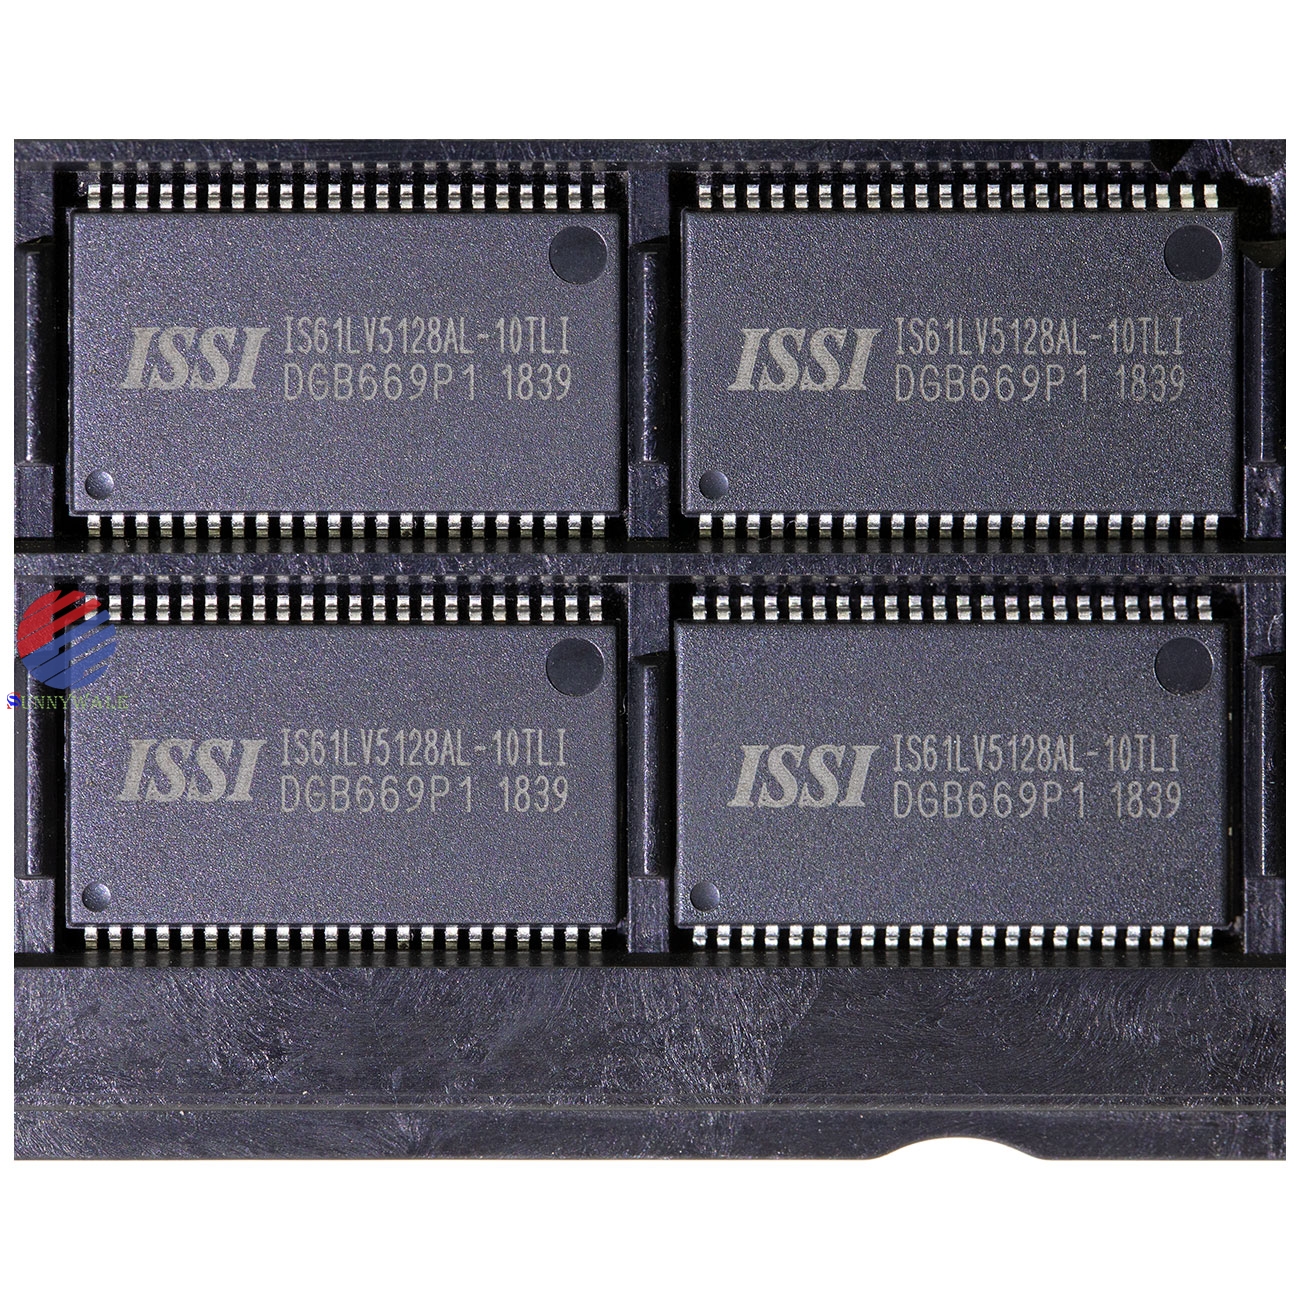 IS61LV5128AL-10TLI, ISSI RAM, 512K×8 high-speed static RAM